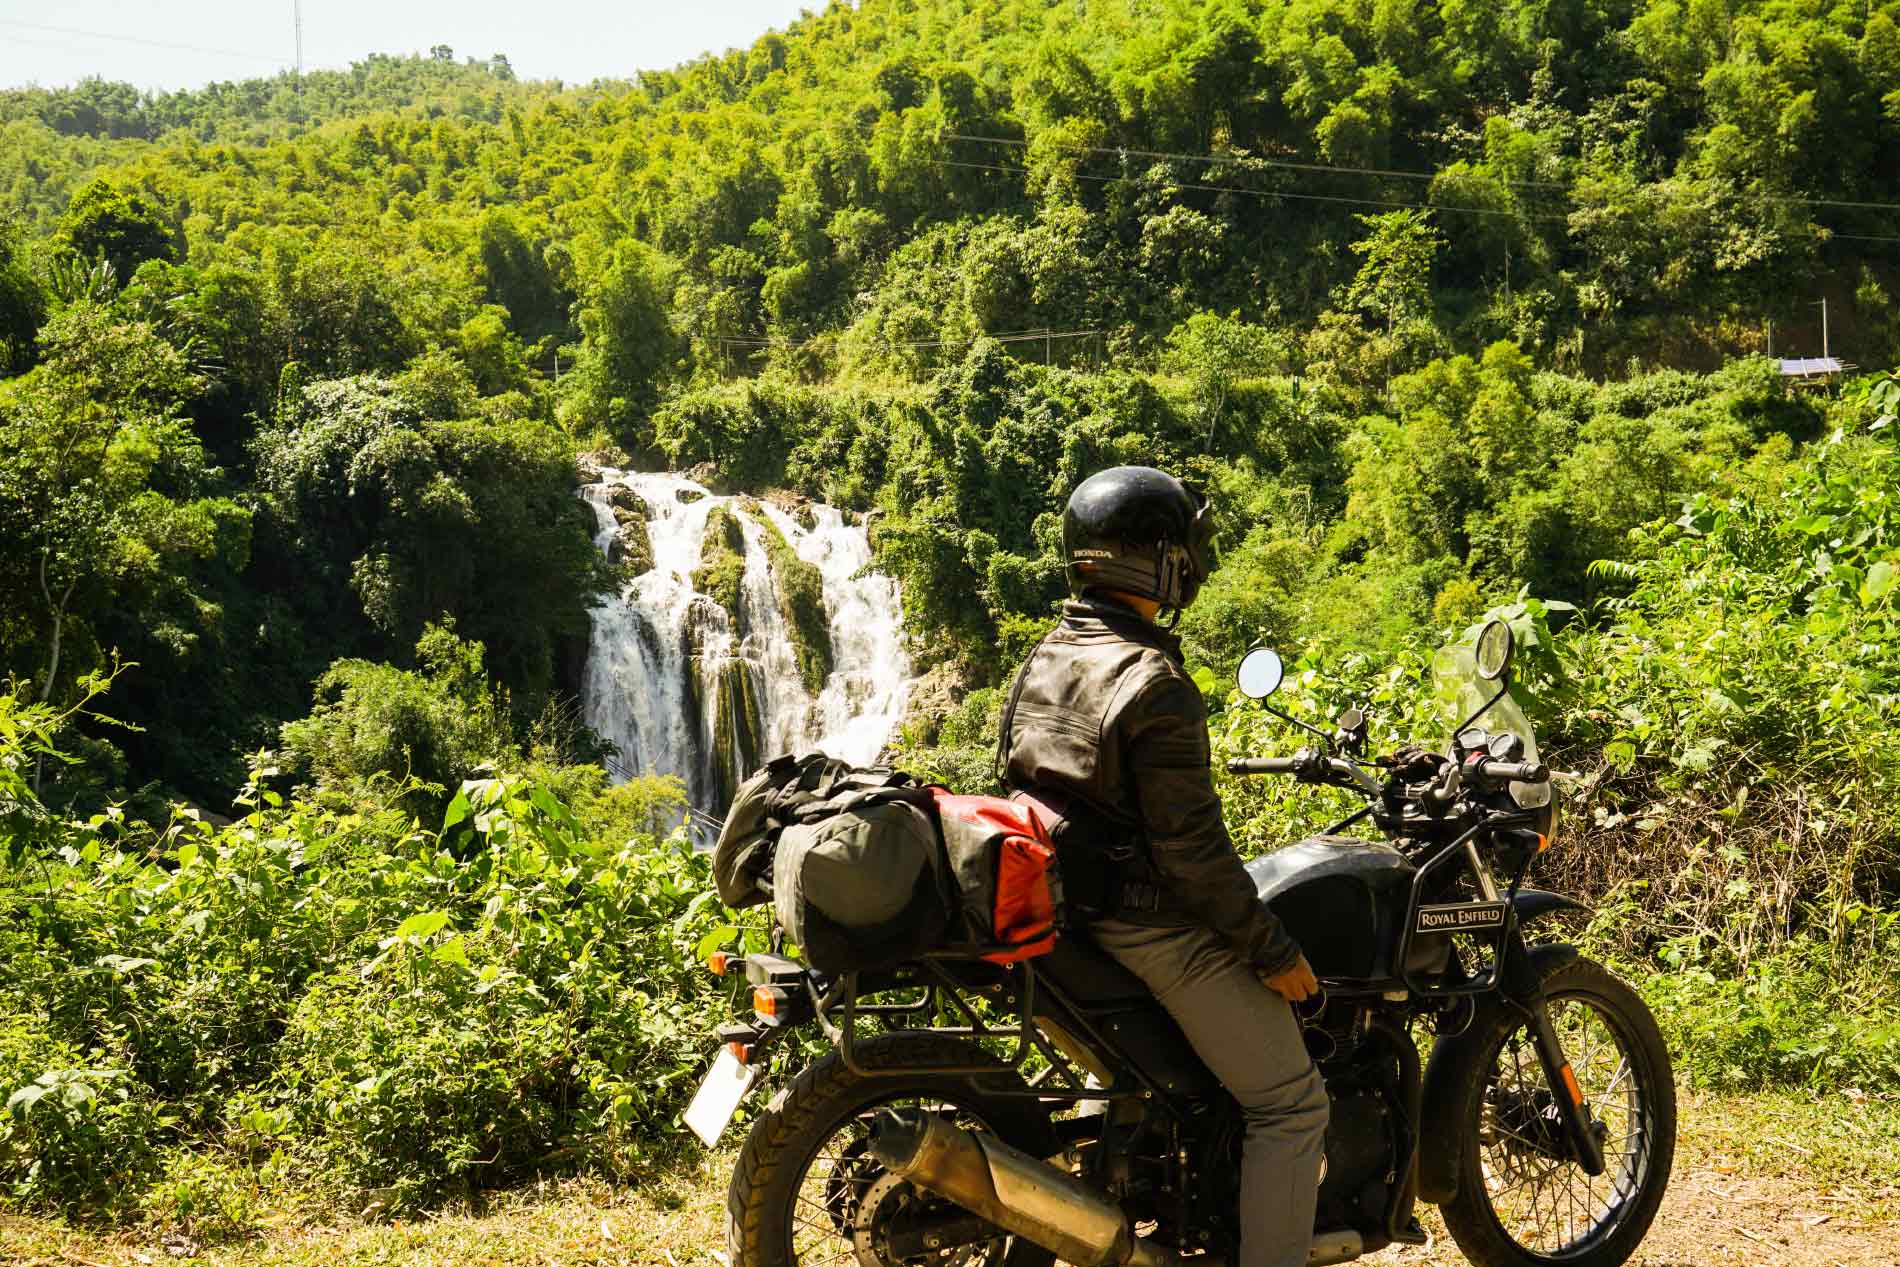 Motorradtour in Nordthailand unter blauen Himmel